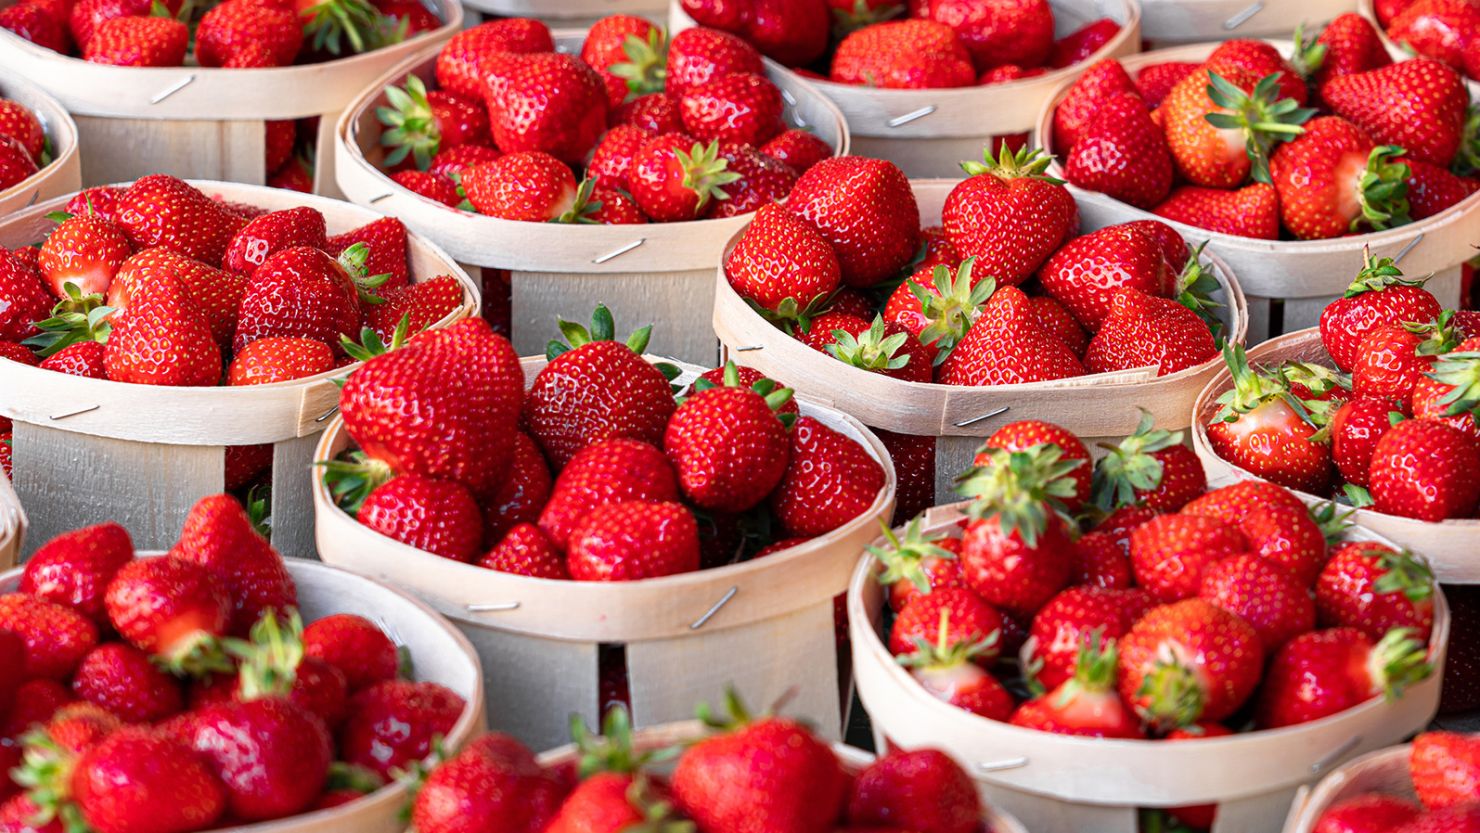 https://media.cnn.com/api/v1/images/stellar/prod/220506091853-01-strawberries-may-recipe-stock.jpg?c=16x9&q=h_833,w_1480,c_fill